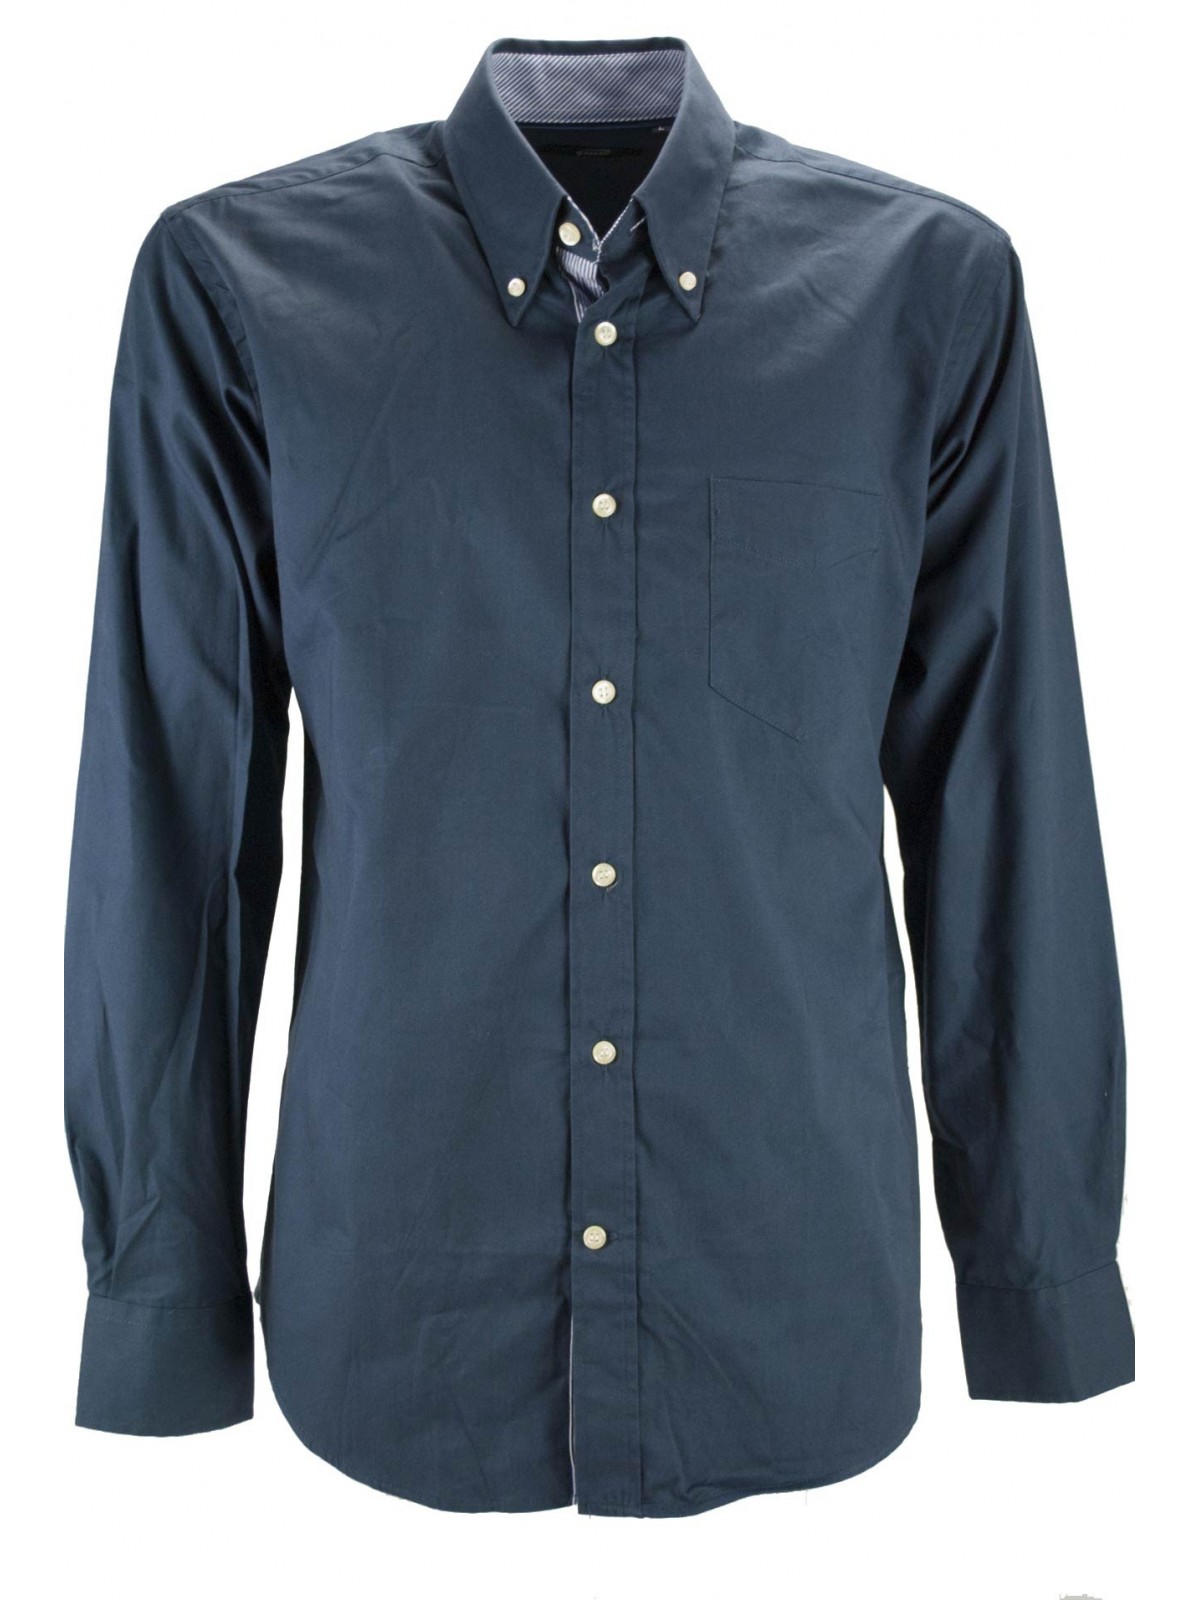 Dark Blue Twill Button Down Man Shirt Light Blue Striped Inside Collar - Grino